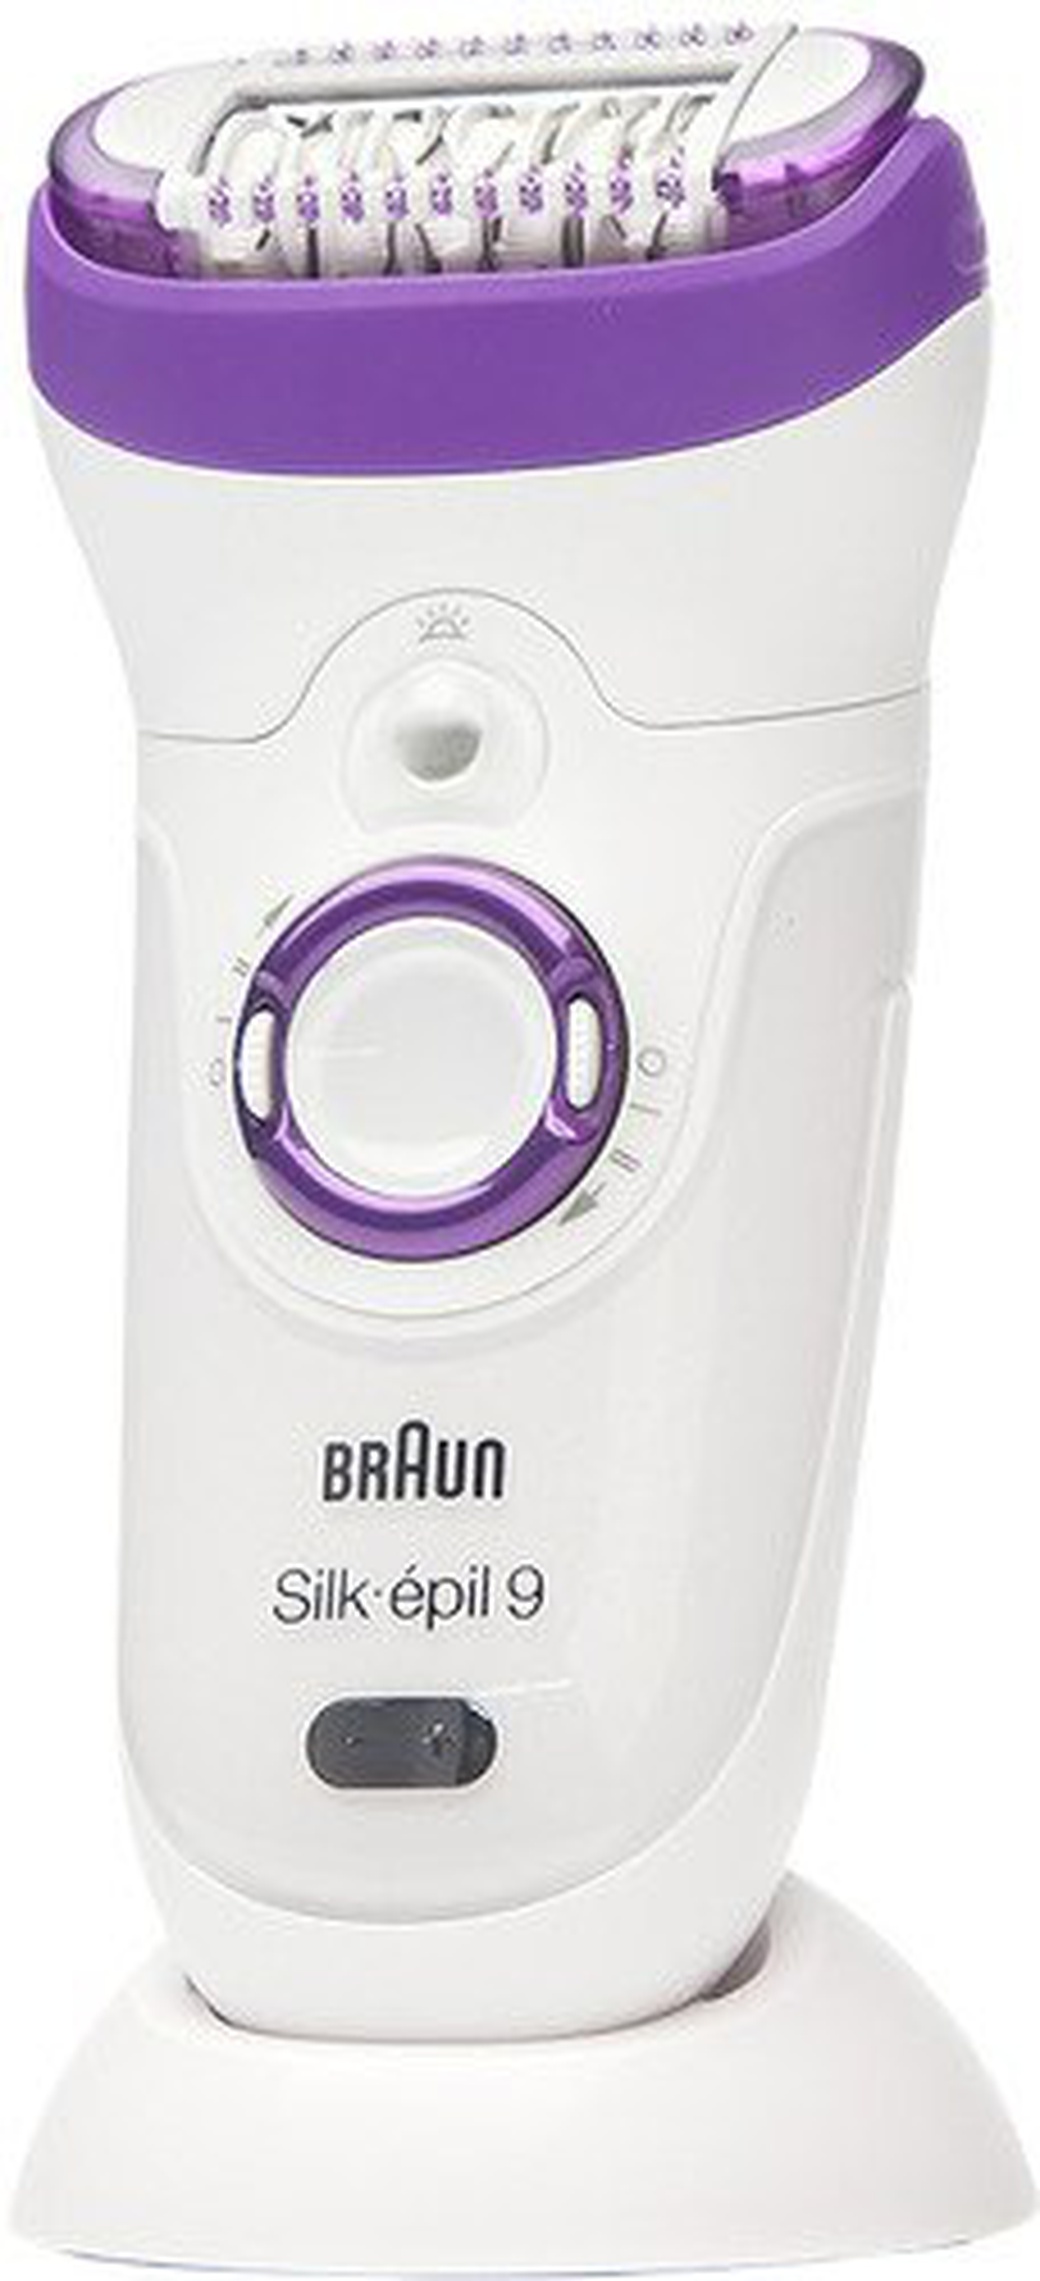 Эпилятор Braun 9579 скор.:2 насад.:7 от аккум. белый/фиолетовый фото